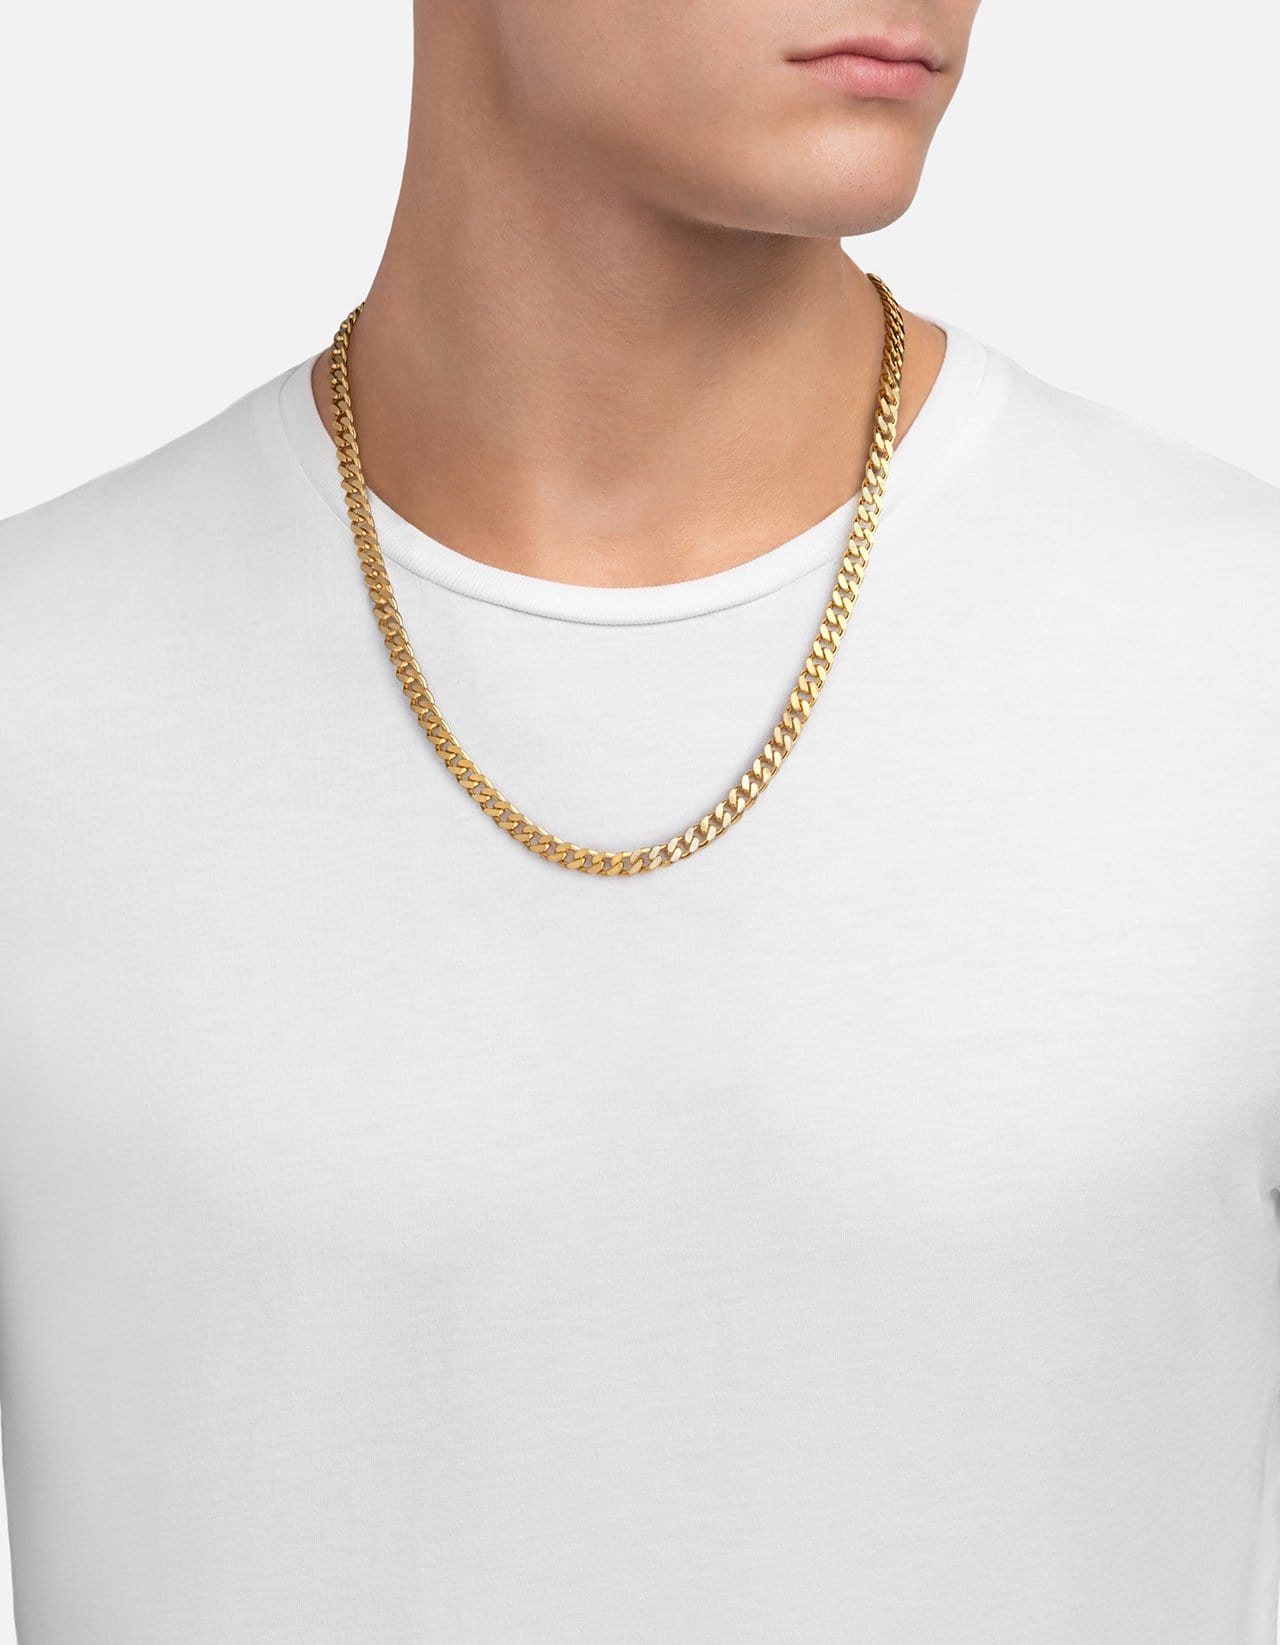 Trendy Fancy Stylish Necklace Chains For Men/Women/Girls/Boys